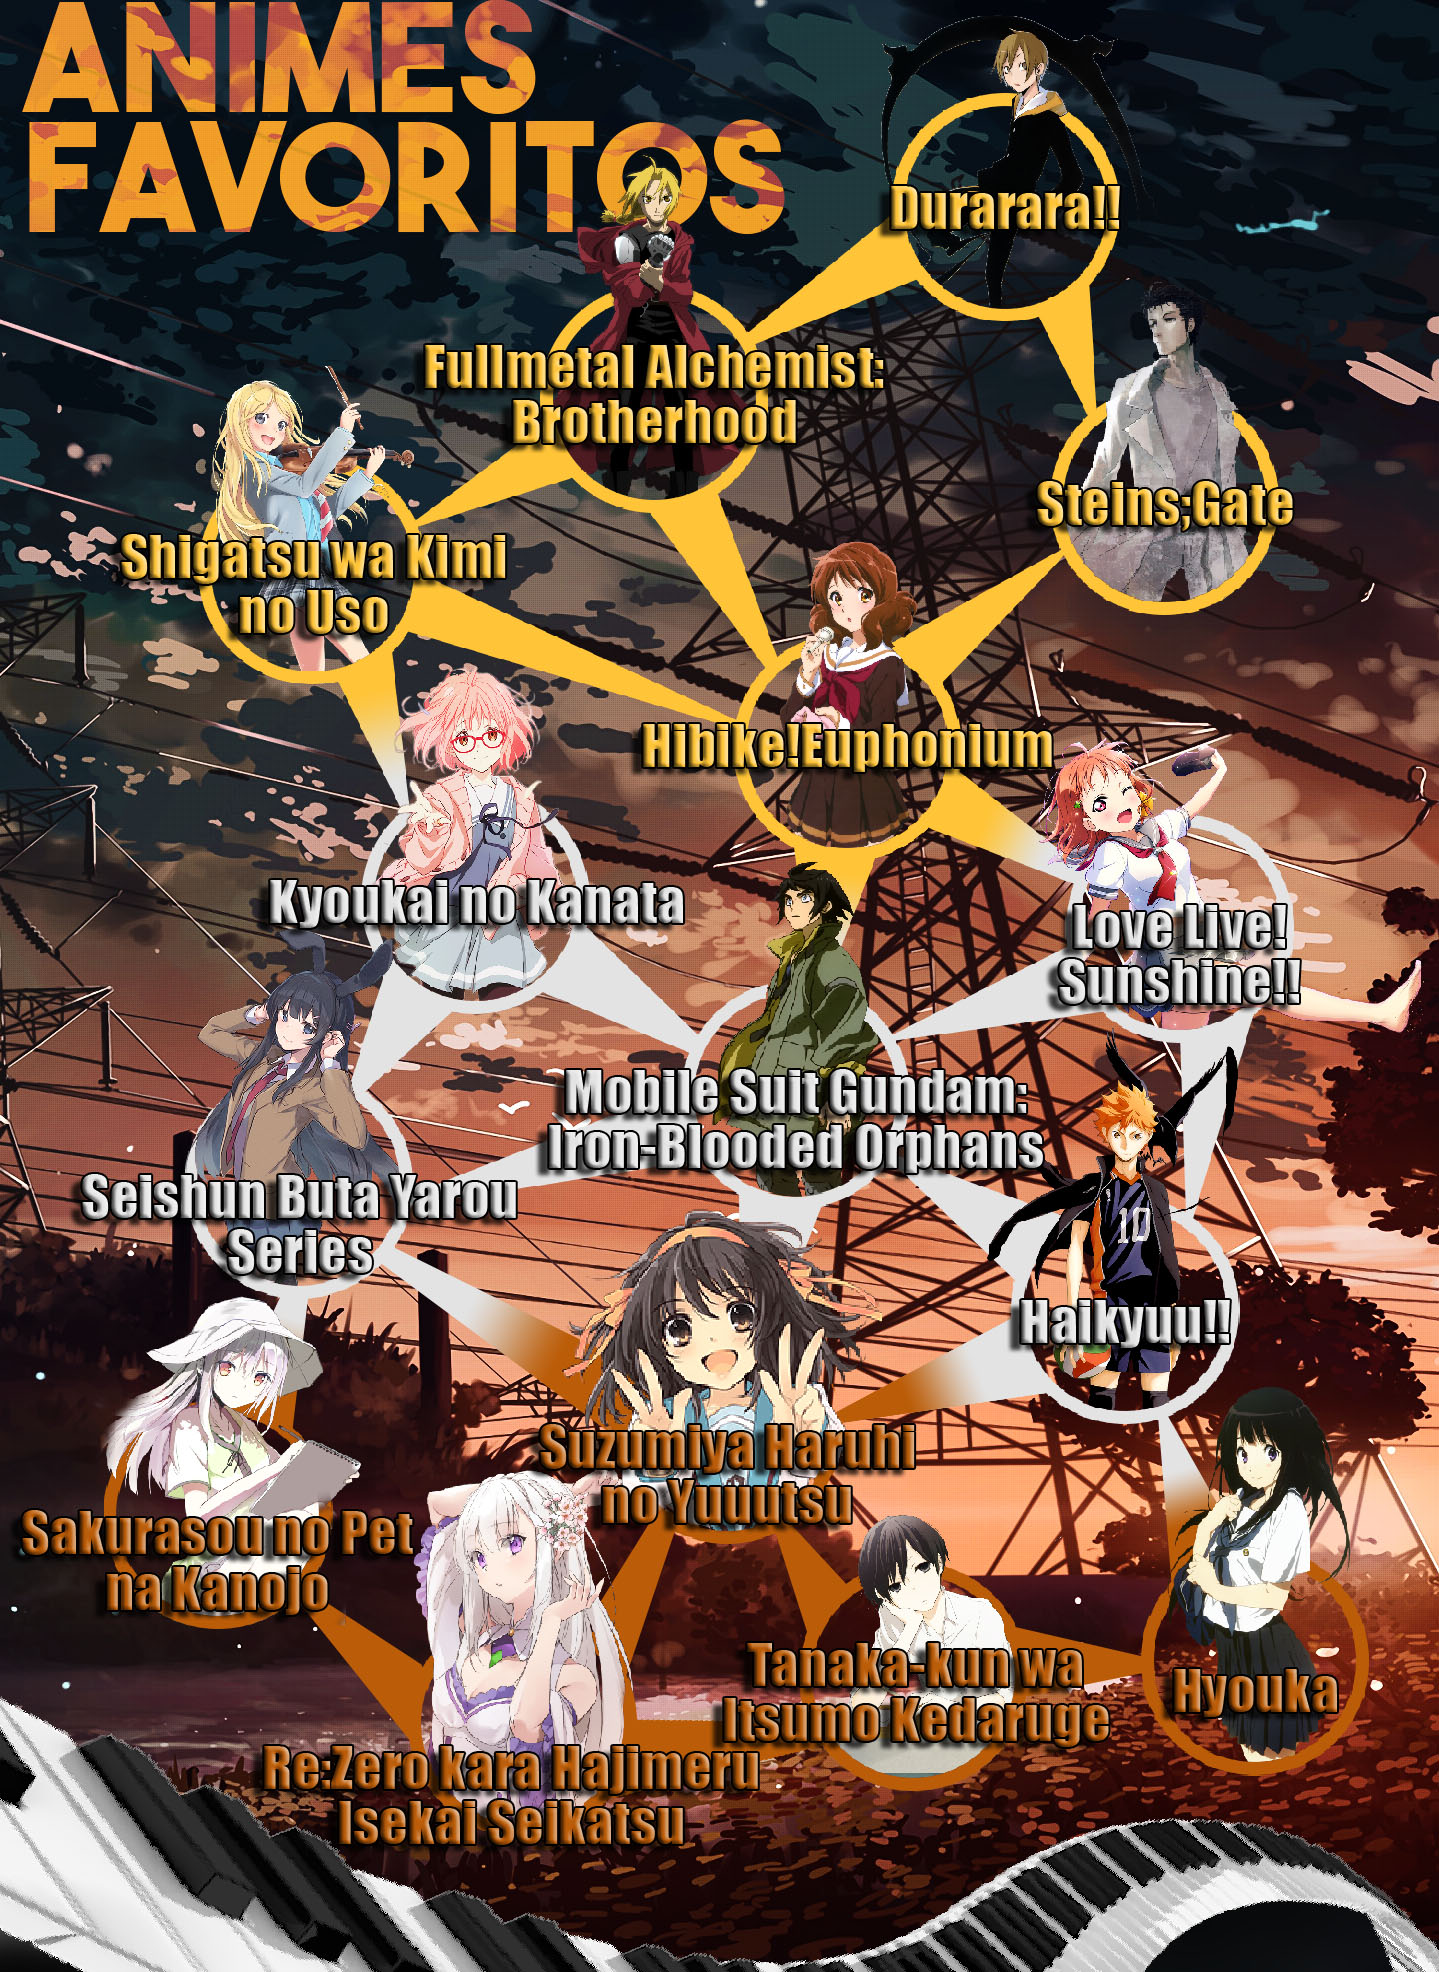 Recomendação de Anime: Fullmetal Alchemist Brotherhood